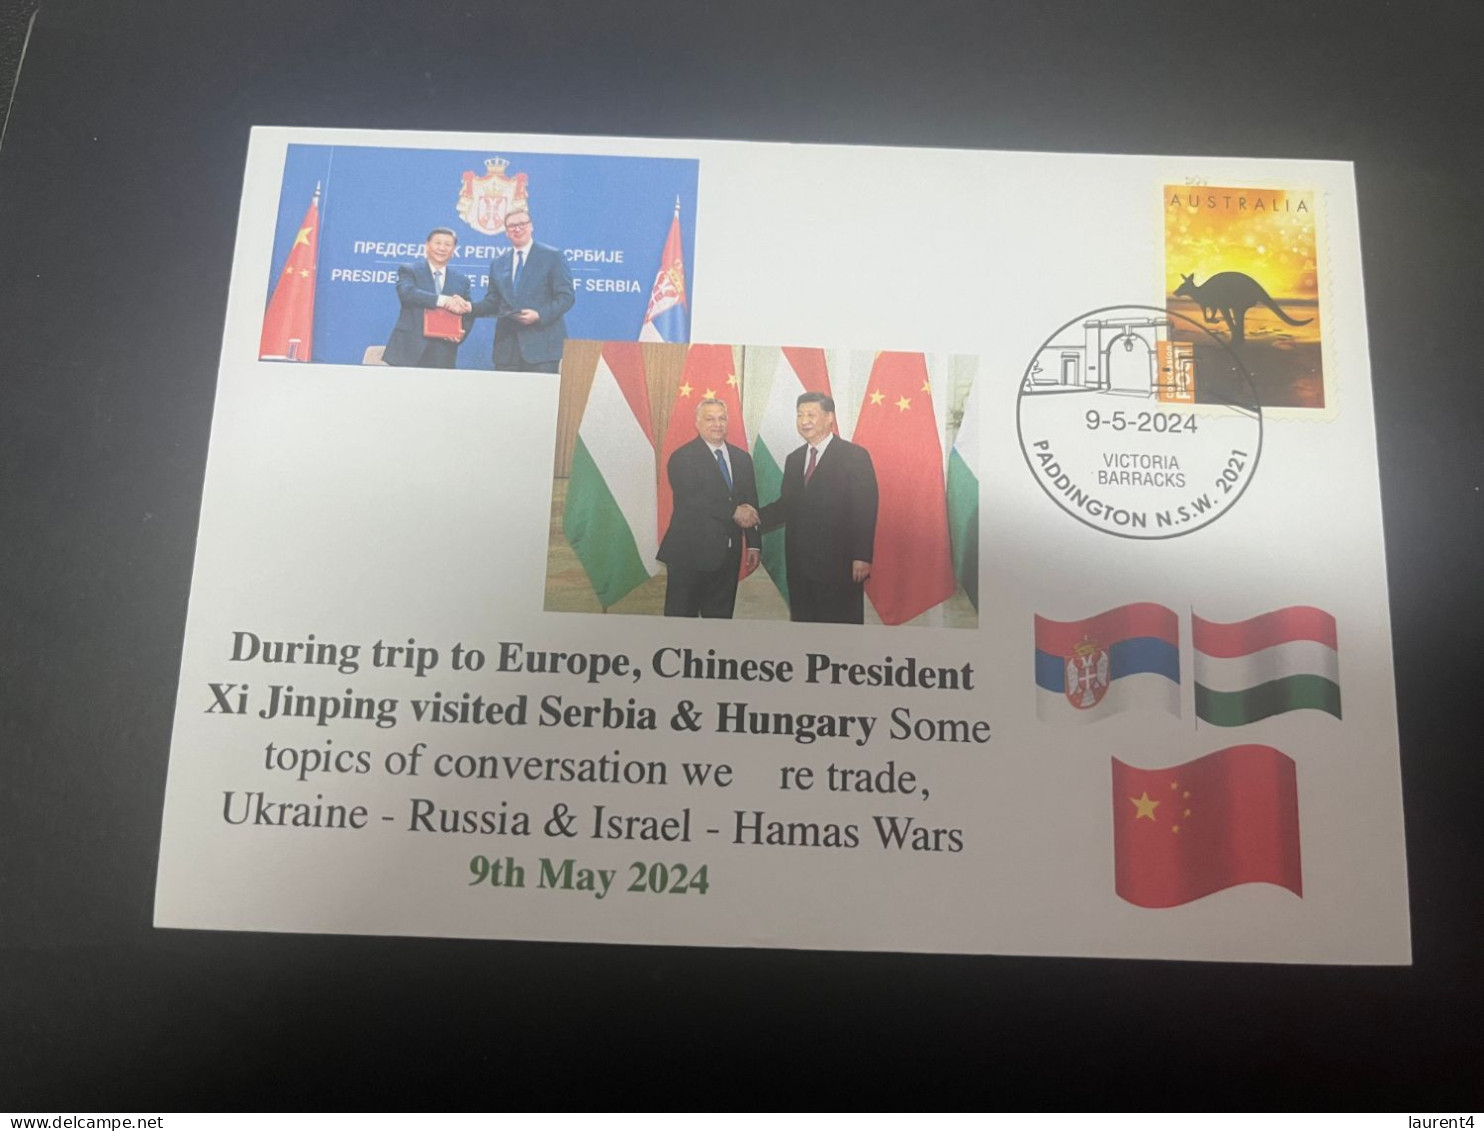 11-5-2024 (4 Z 42) China President Xi Visit To Serbia & Hungary - Topics Russia Ukraine & Israel Gaza Wars + Trade - Militares